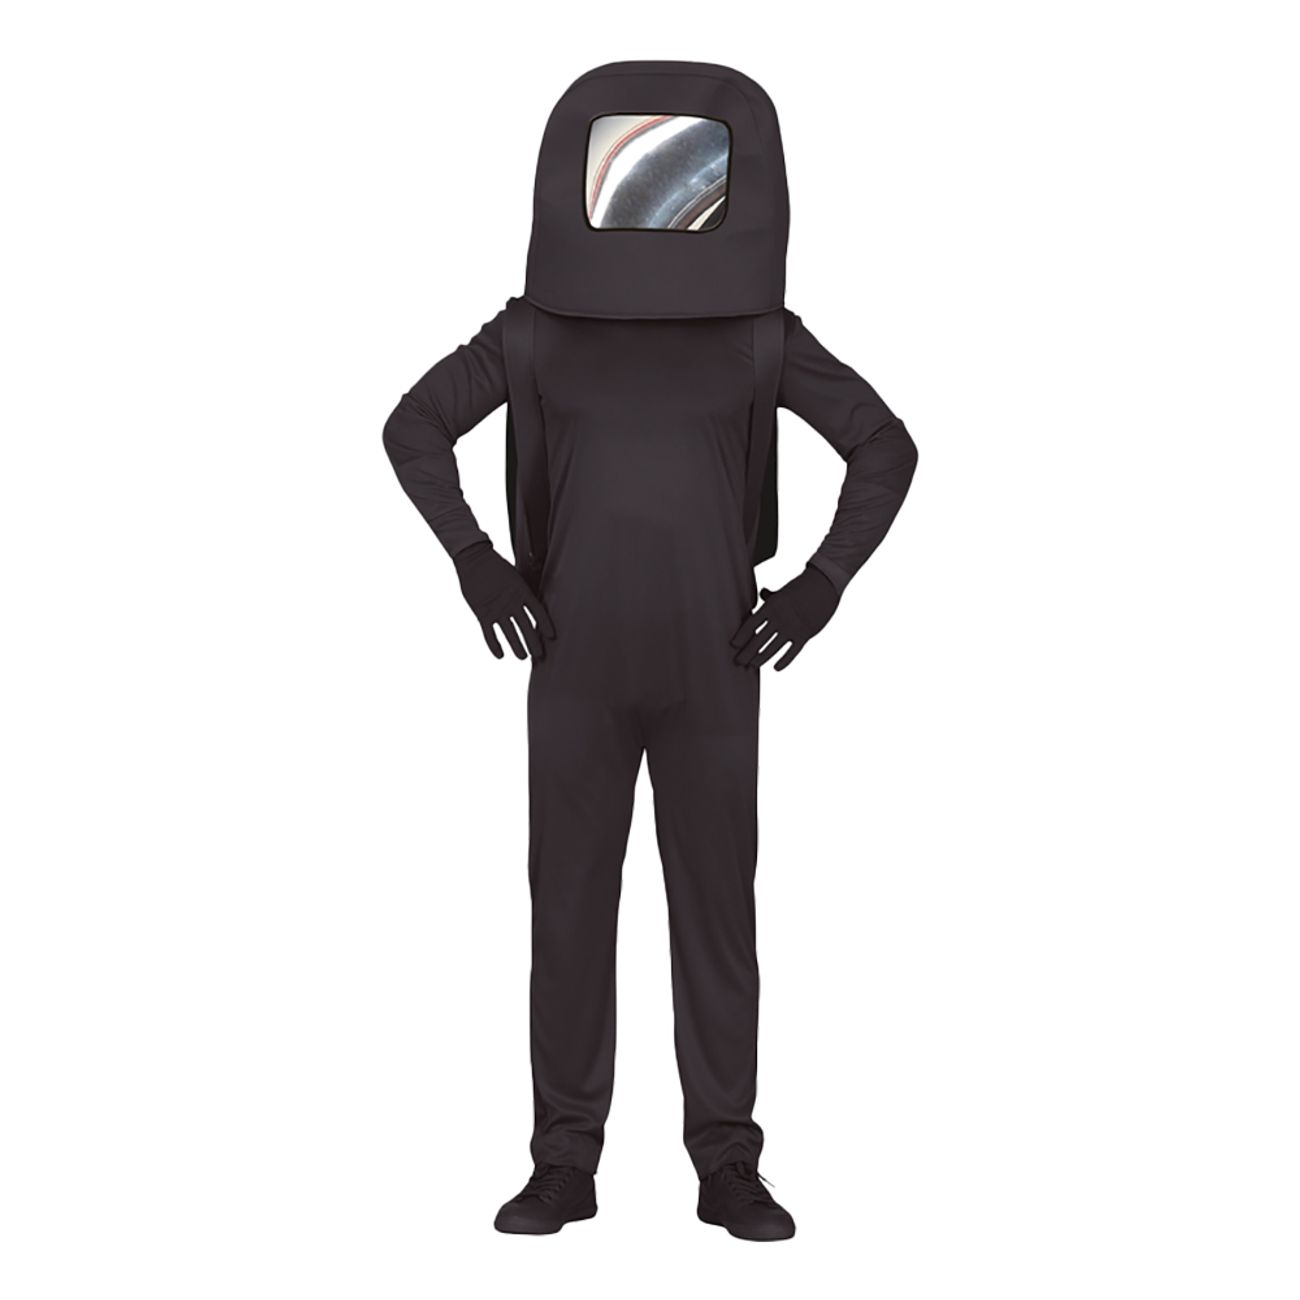 svart-astronaut-teen-maskeraddrakt-78693-1